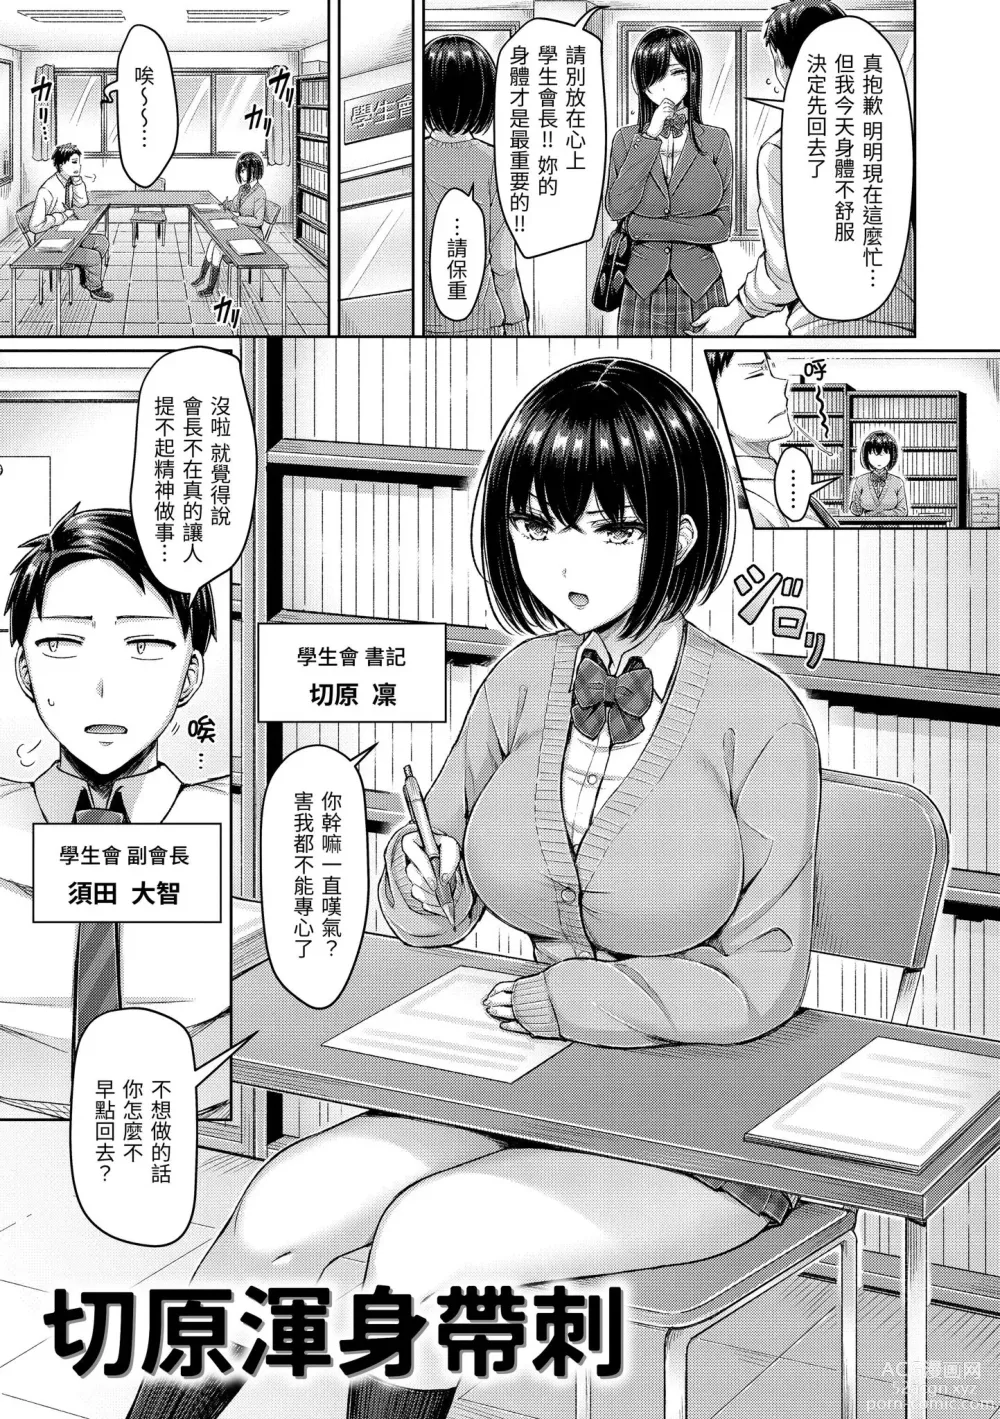 Page 5 of manga 來勢胸胸！